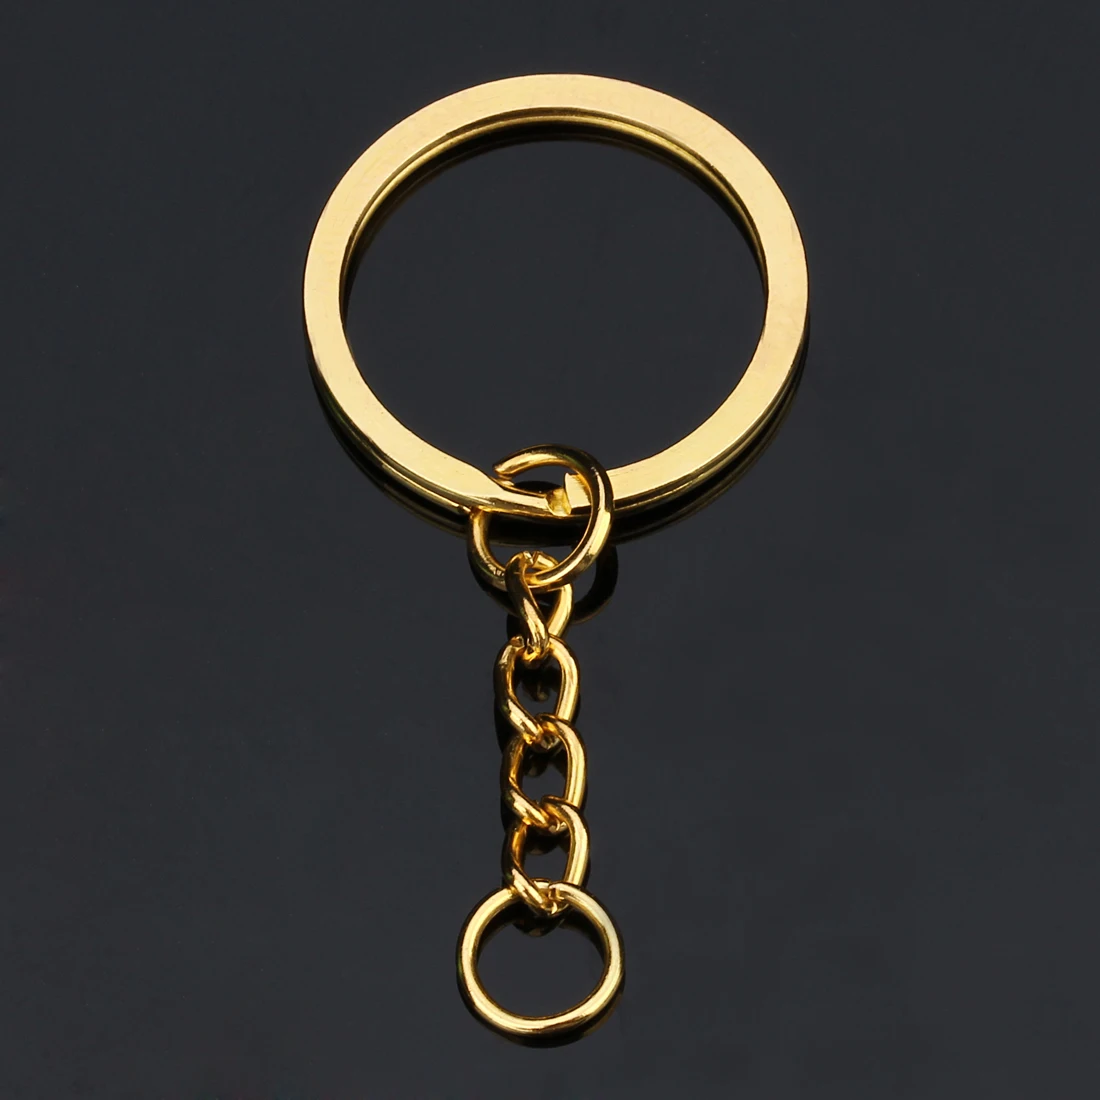 

10Pcs/lots Key Chain Key Ring keychain Bronze Rhodium Gold 30mm Long Round Split Keyrings Keychain Jewelry Making Wholesale DIY